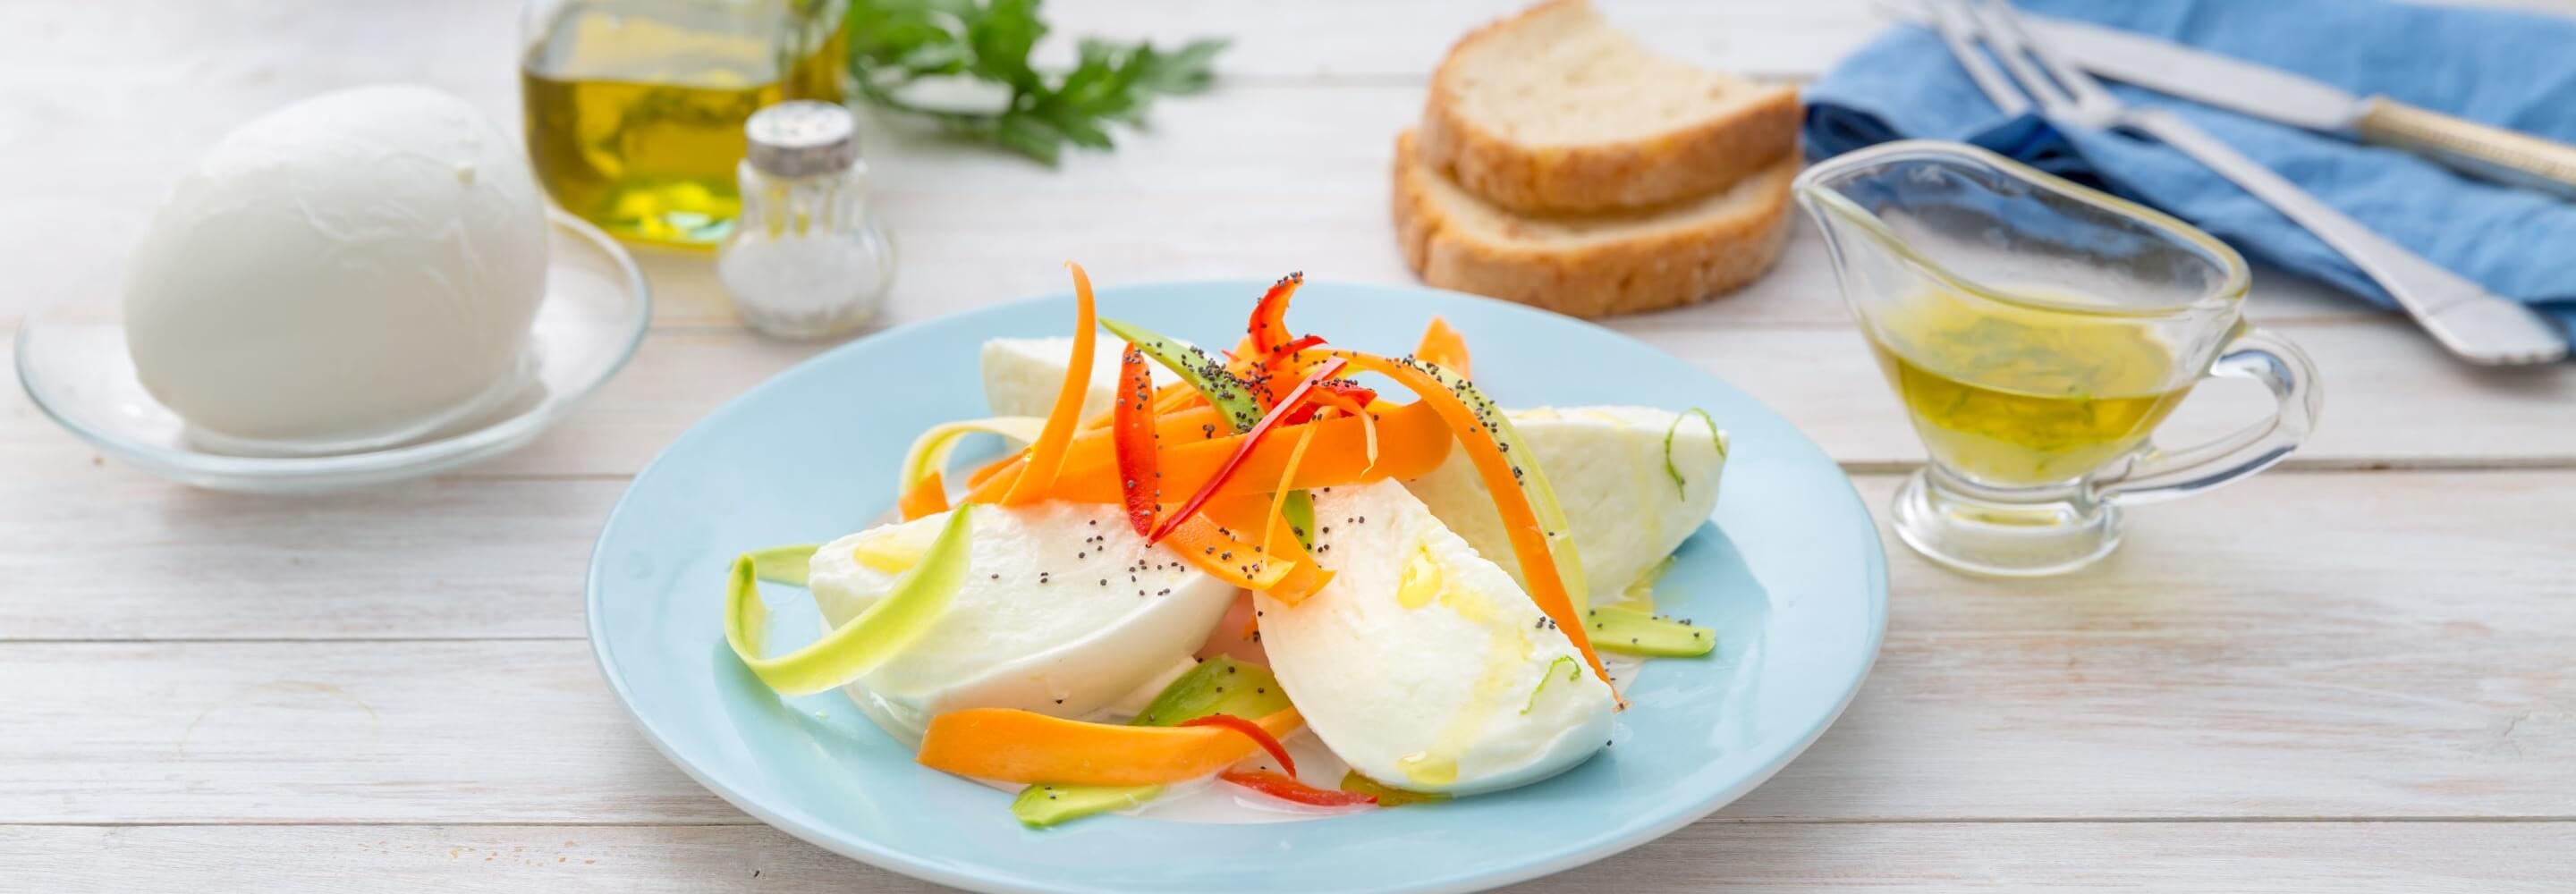 Sommergemüse-Salat mit Mozzarella